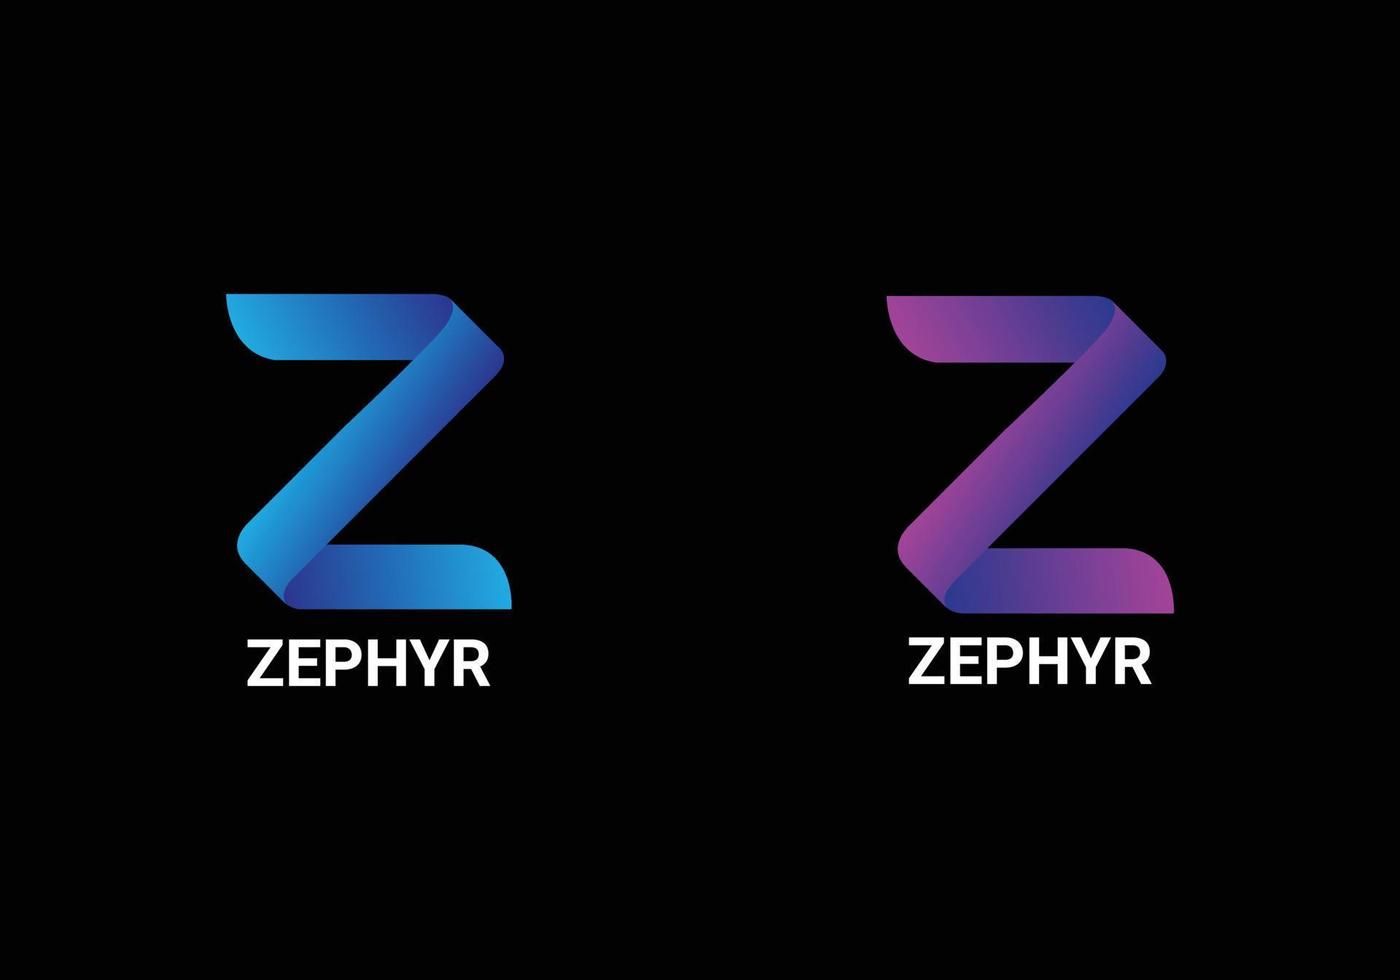 zwphyr resumen letra z letras modernas diseño de logotipo vector